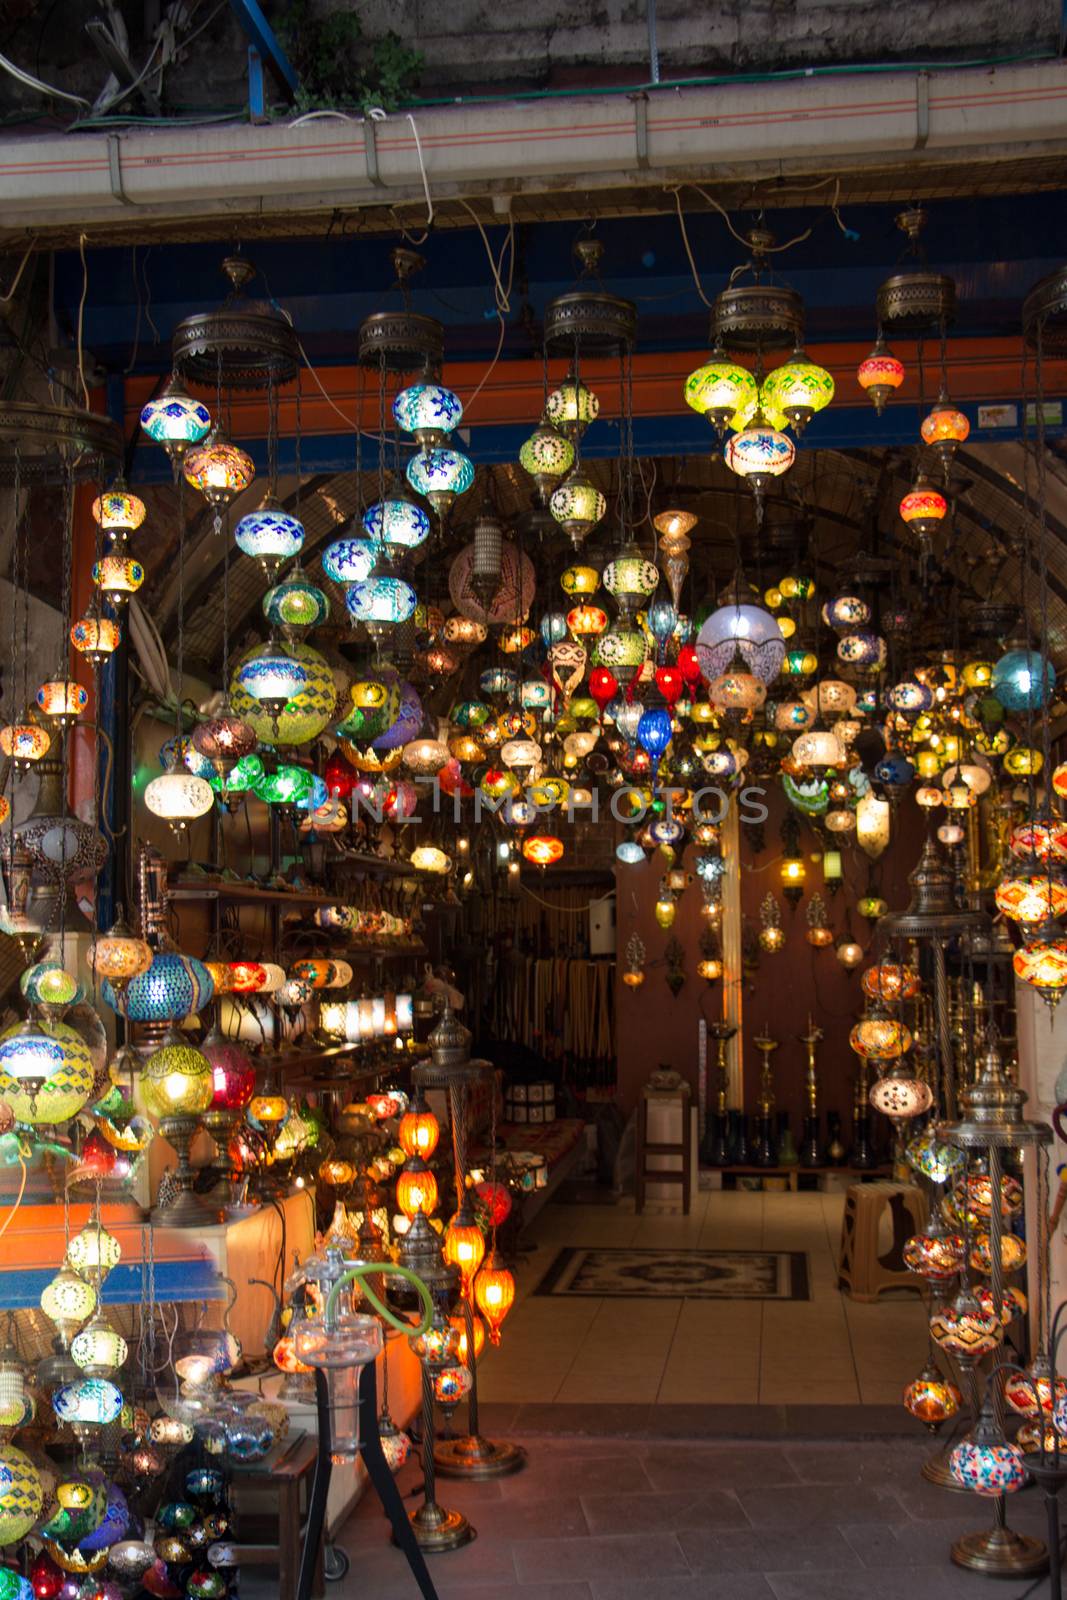 Mosaic Ottoman lamps from Grand Bazaar  by berkay